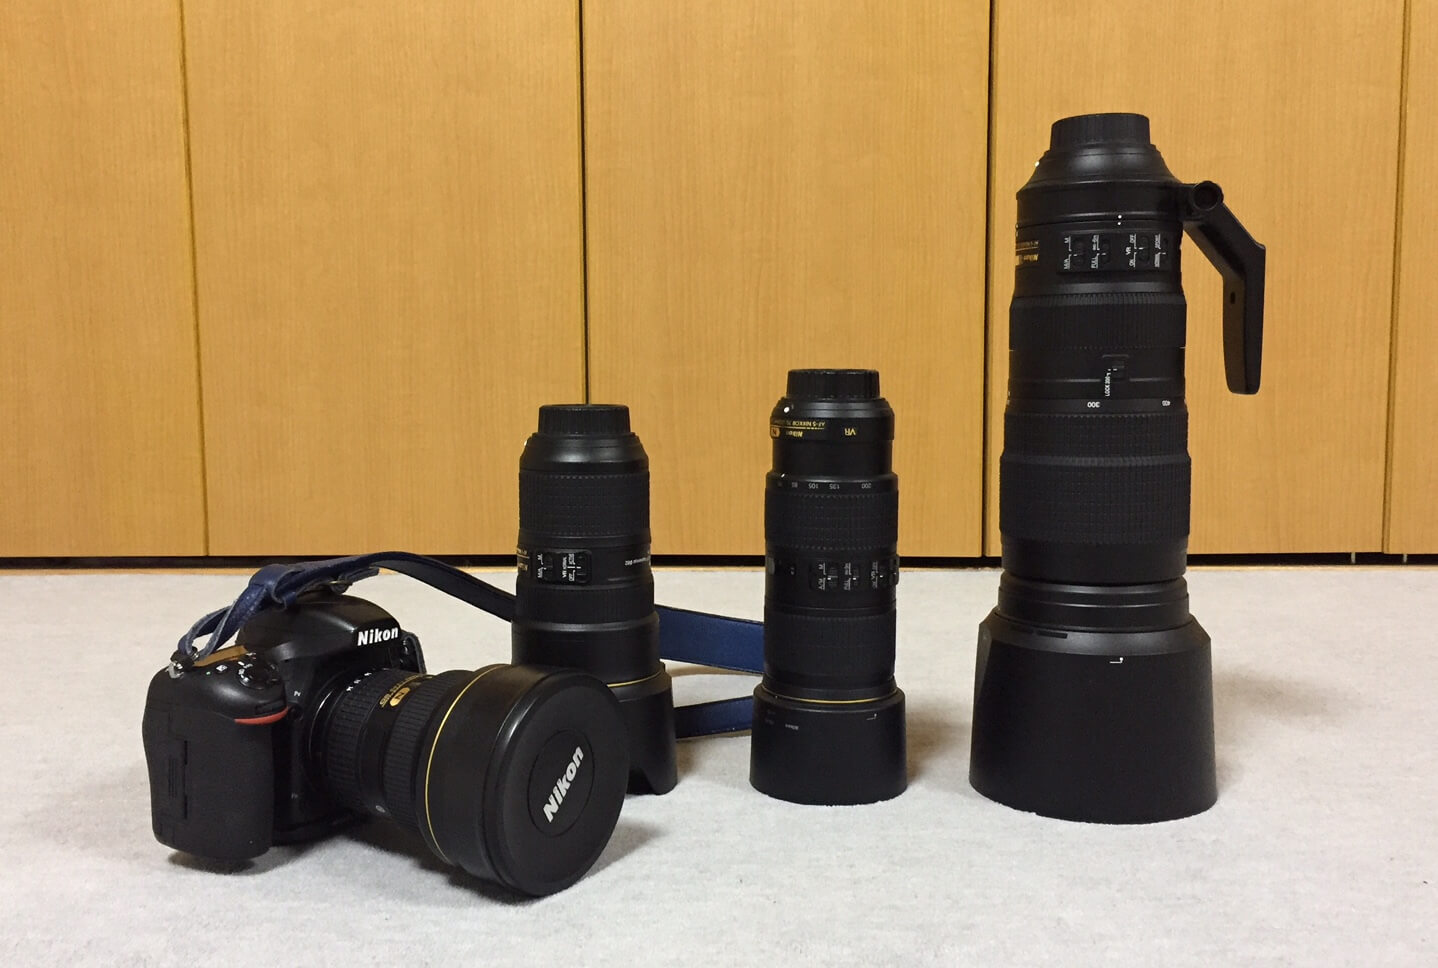 Nikon AF-S NIKKOR 200-500mm f/5.6E ED VRを購入！待望の超望遠レンズの所感について！ – 一眼レフカメラ・写真初心者のカメラブログ